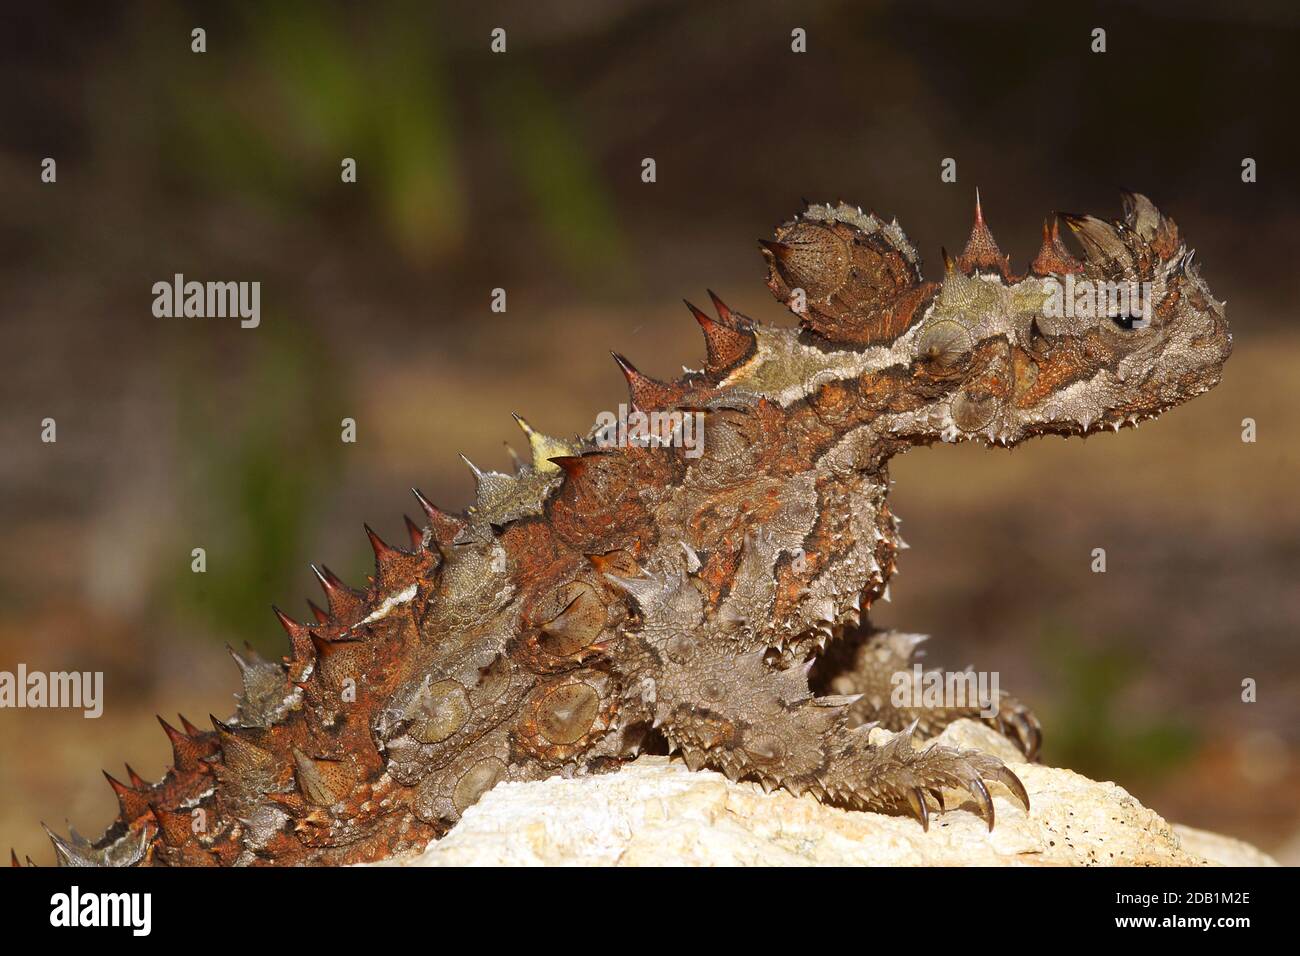 Head of Australian Thorny Devil, Moloch horridus, an ant-eating lizard, natural habitat in Kalbarri, Western Australia, lateral view Stock Photo